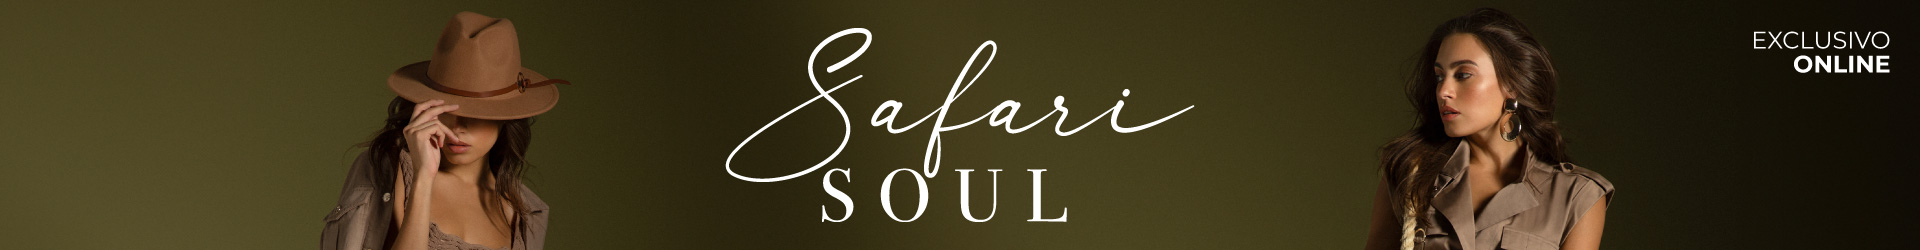 Safari soul | Studio F México